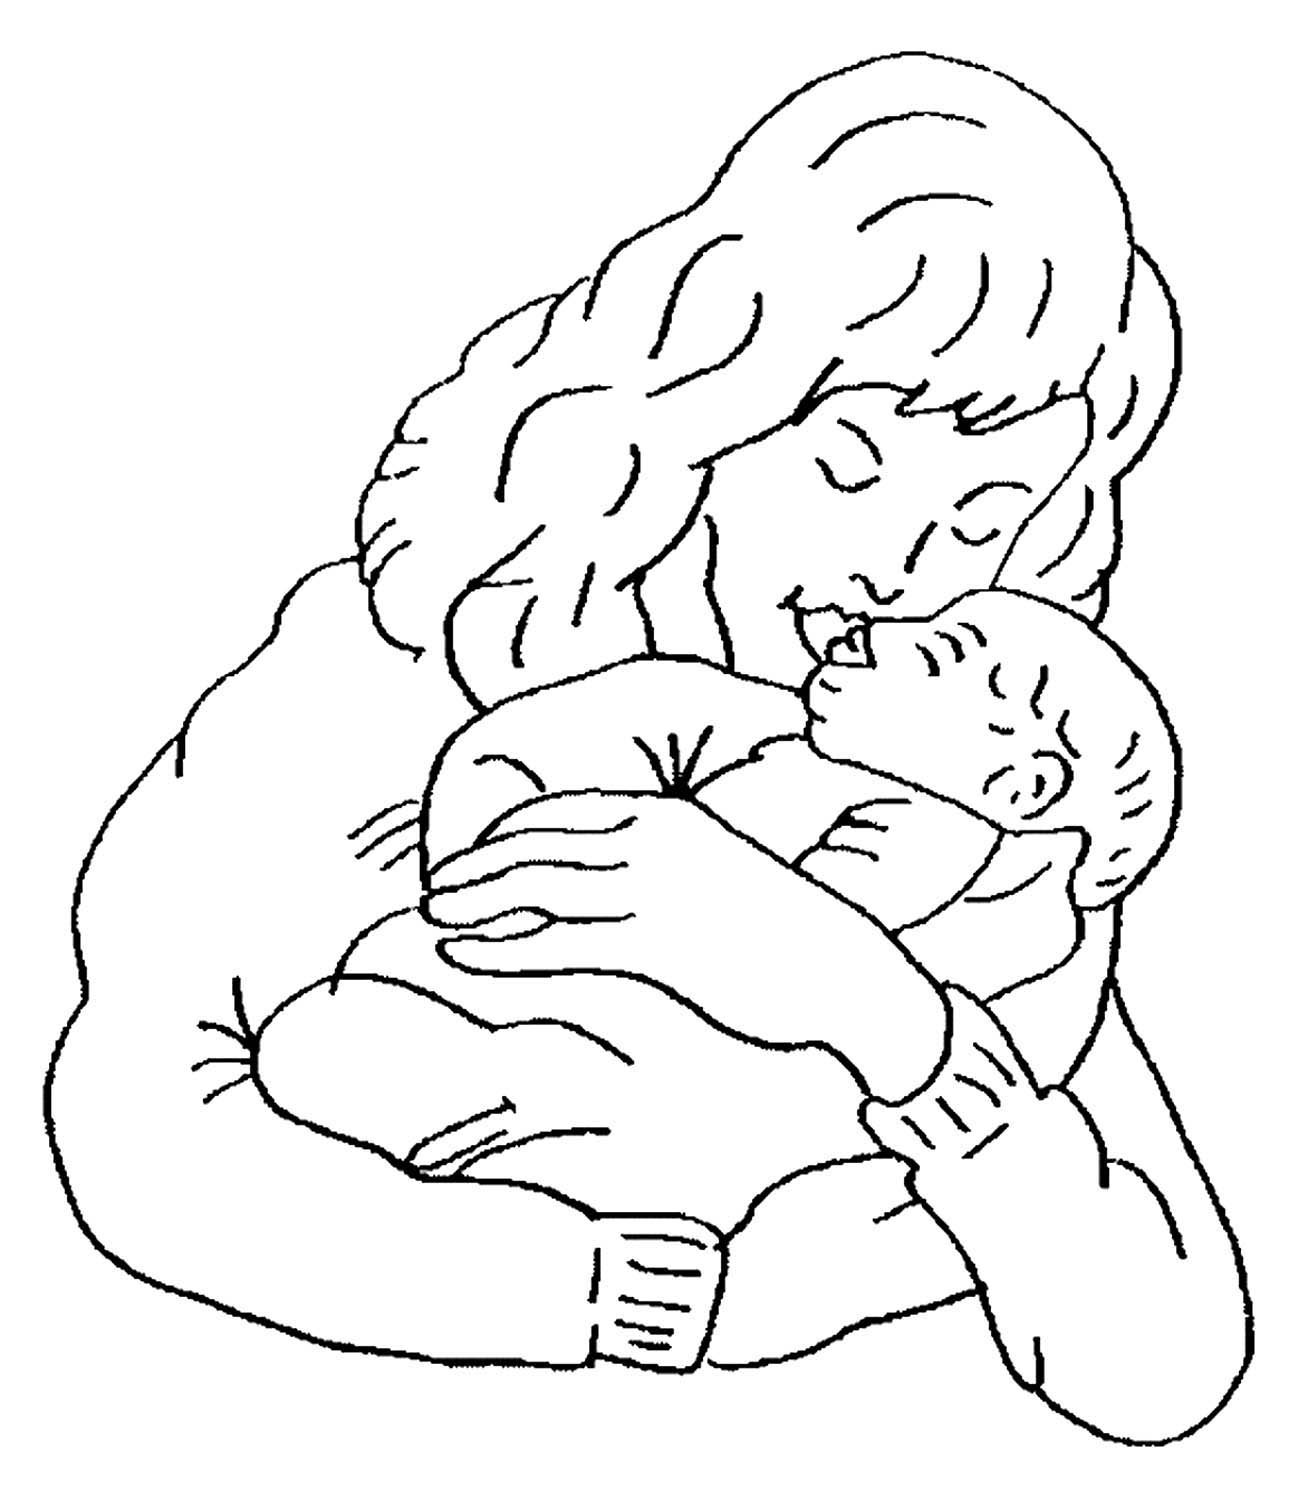 Раскраска про маму. Рисунок ко Дню матери. Раскраска мама с младенцем. Мама с ребенком раскраска для детей. Рисунок на день матери легкий.